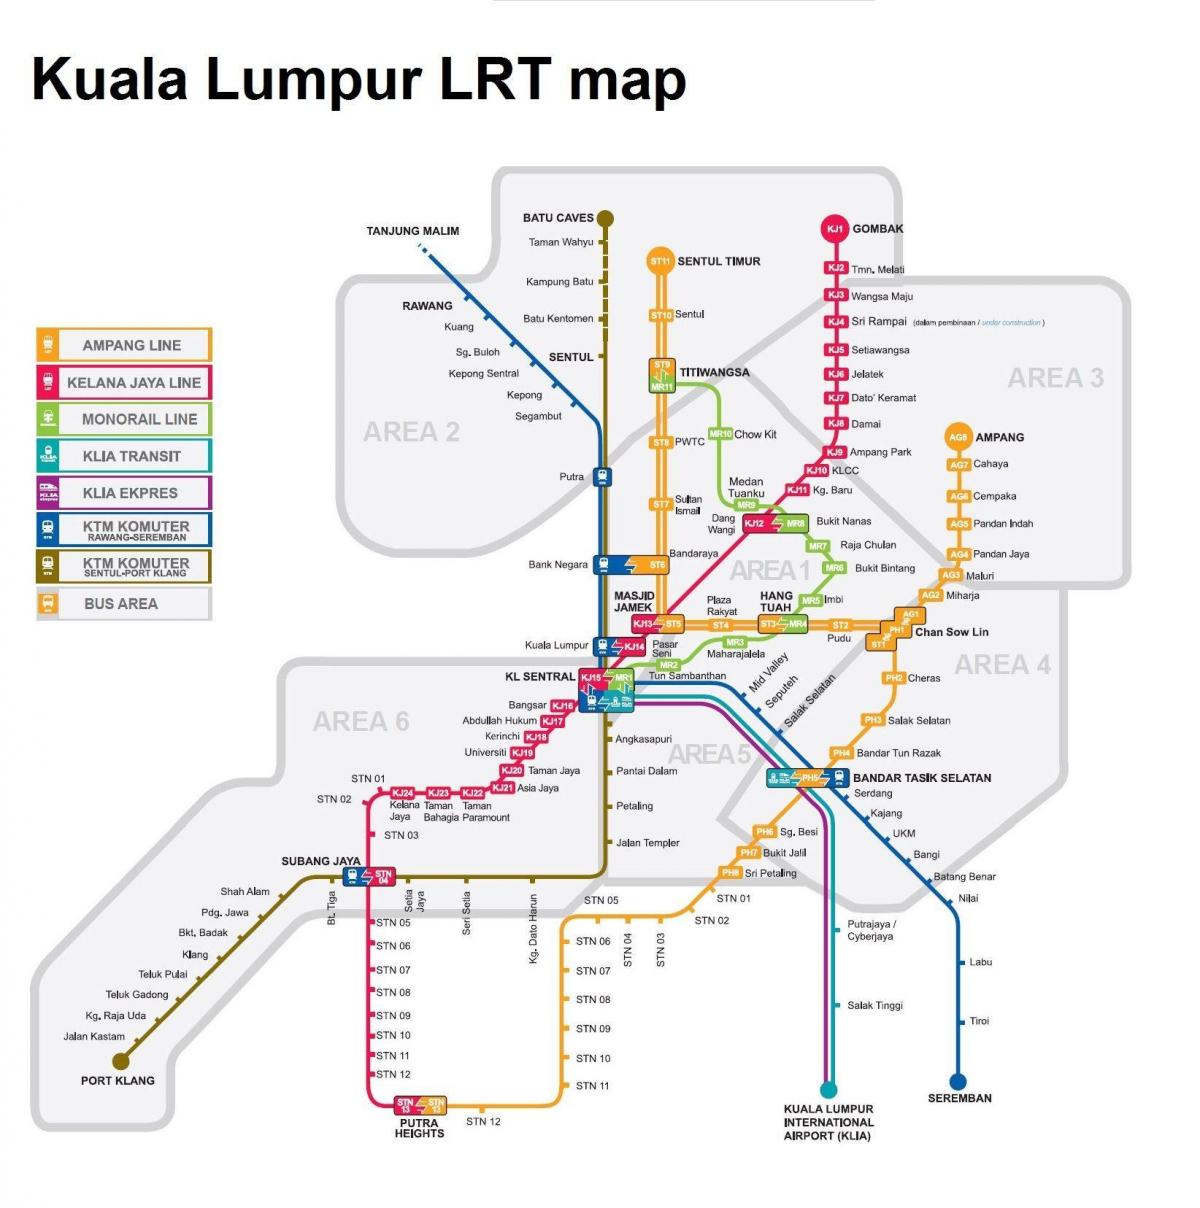 lrt地図マレーシア-2016年